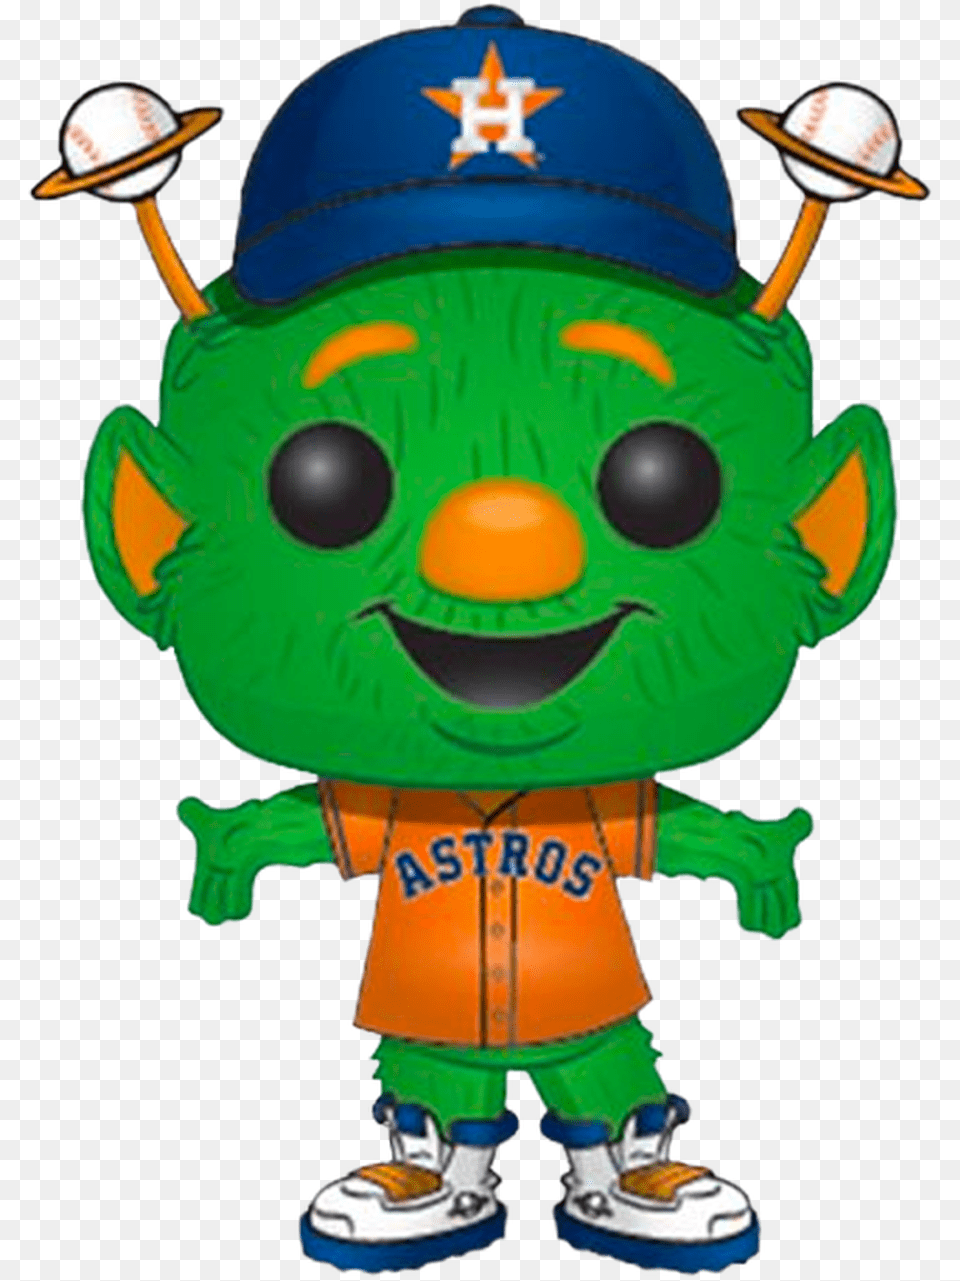 Mlb Baseball Orbit Houston Astros Mascot Pop Vinyl Figure Houston Astros Orbit, Toy Free Transparent Png